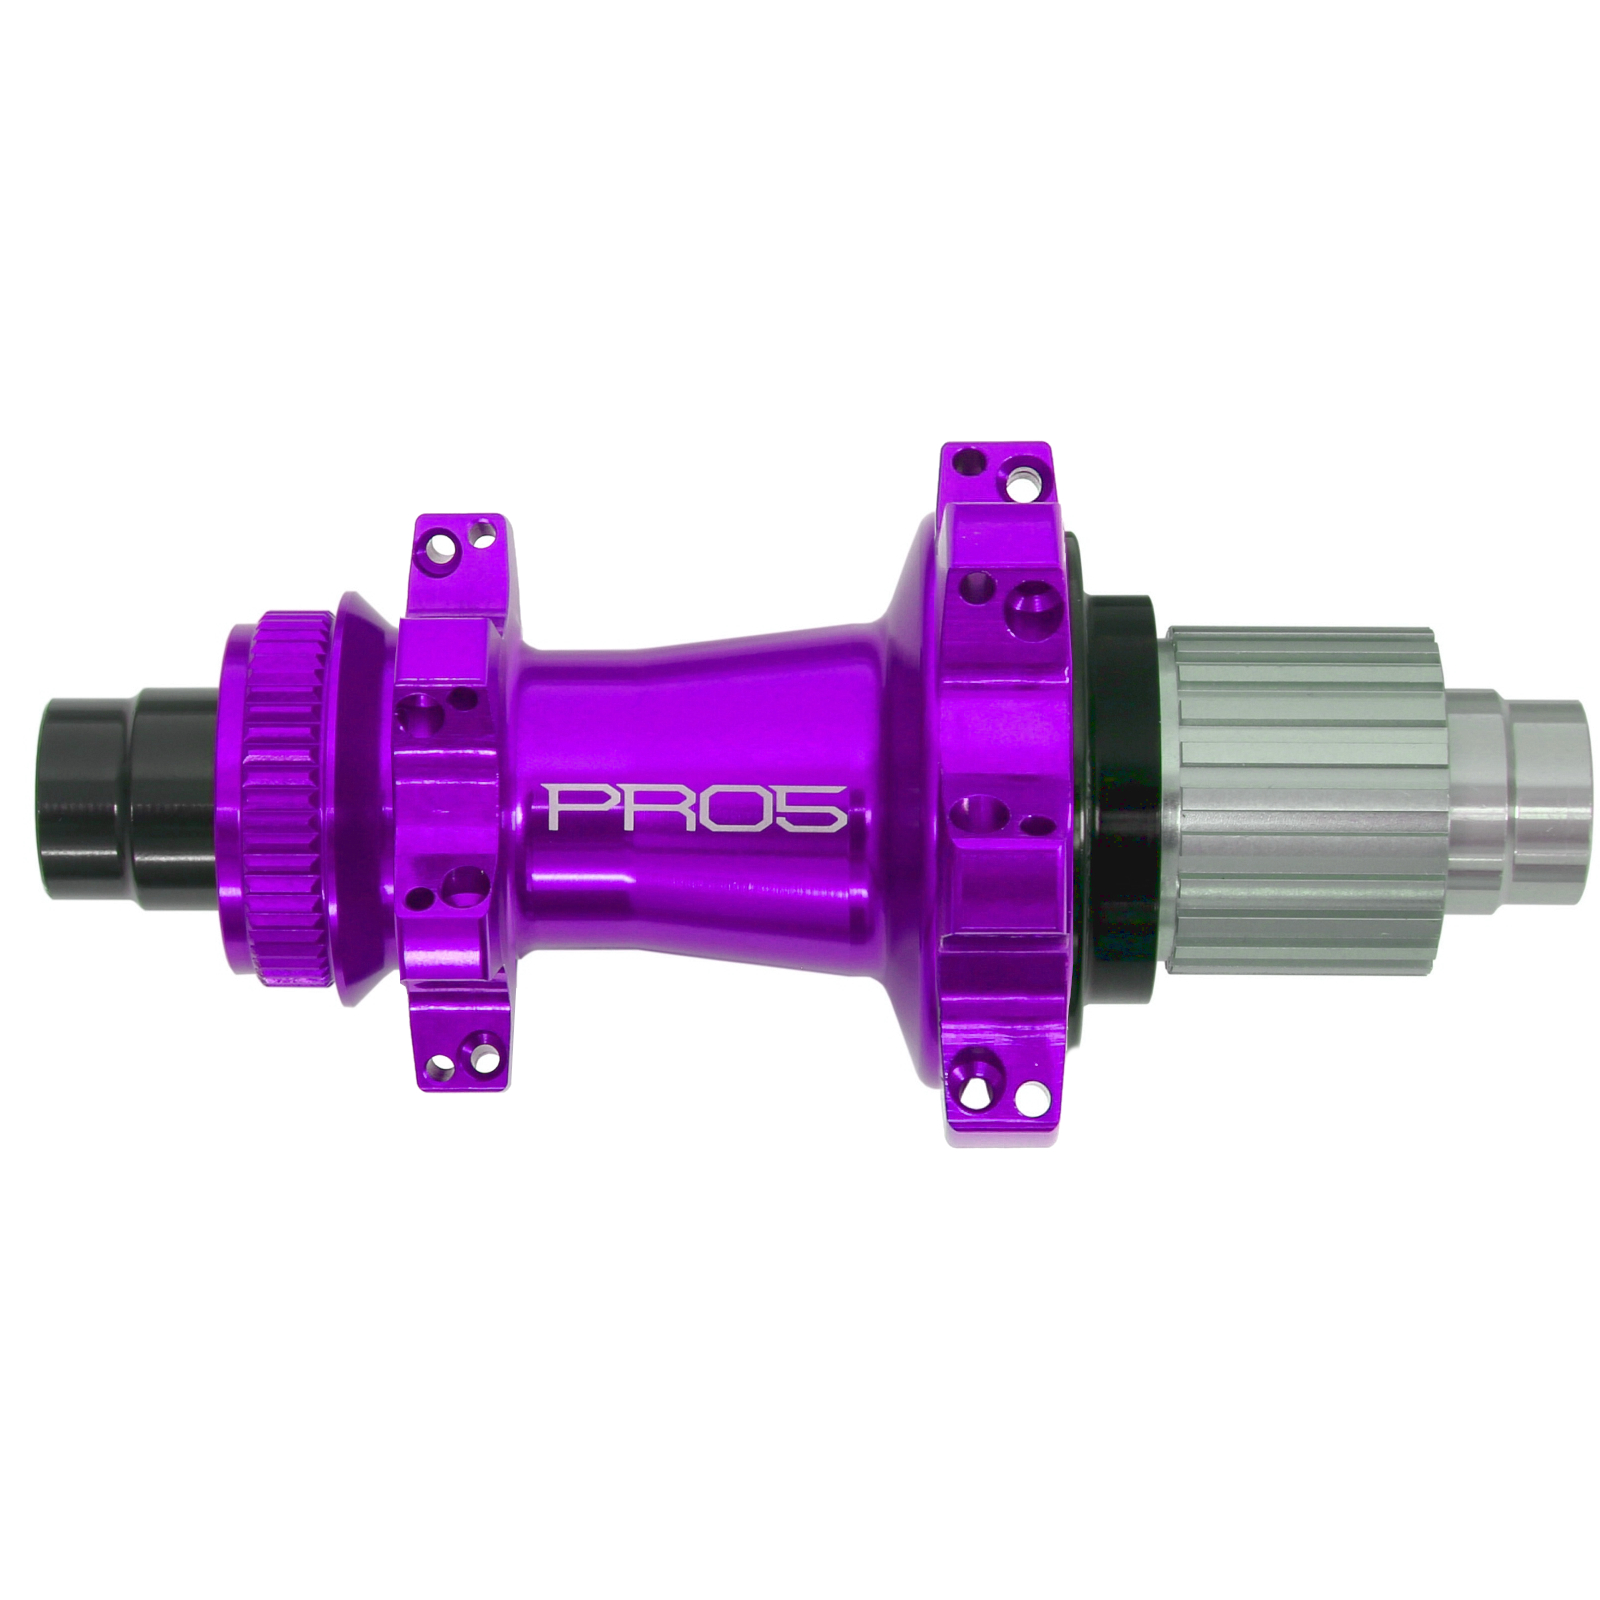 Produktbild von Hope Pro 5 Straightpull Hinterradnabe - Centerlock - 12x142mm | Shimano Micro Spline - lila